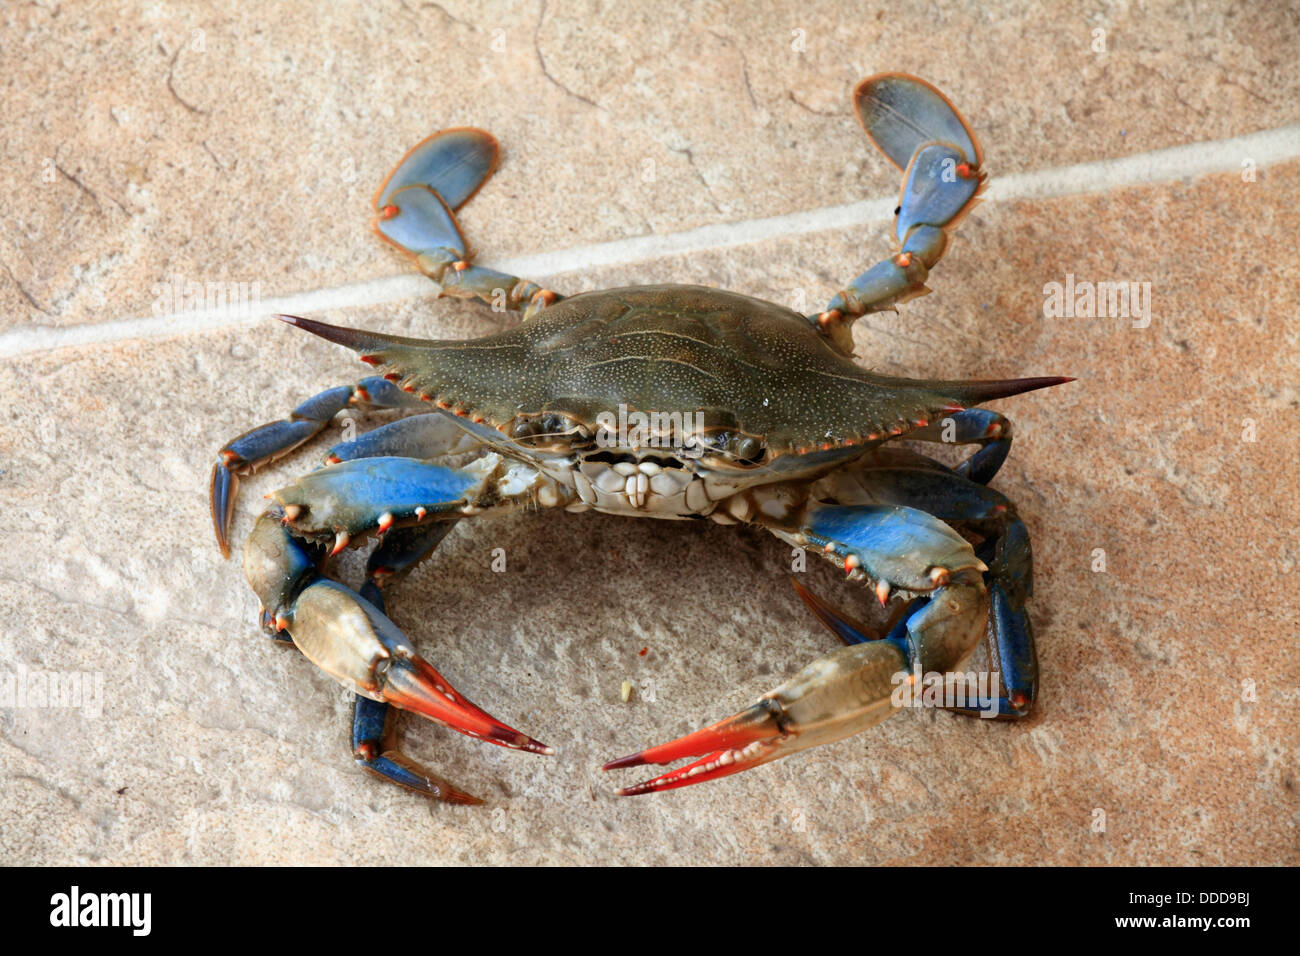 Atlantic blue crab, Stock Photo